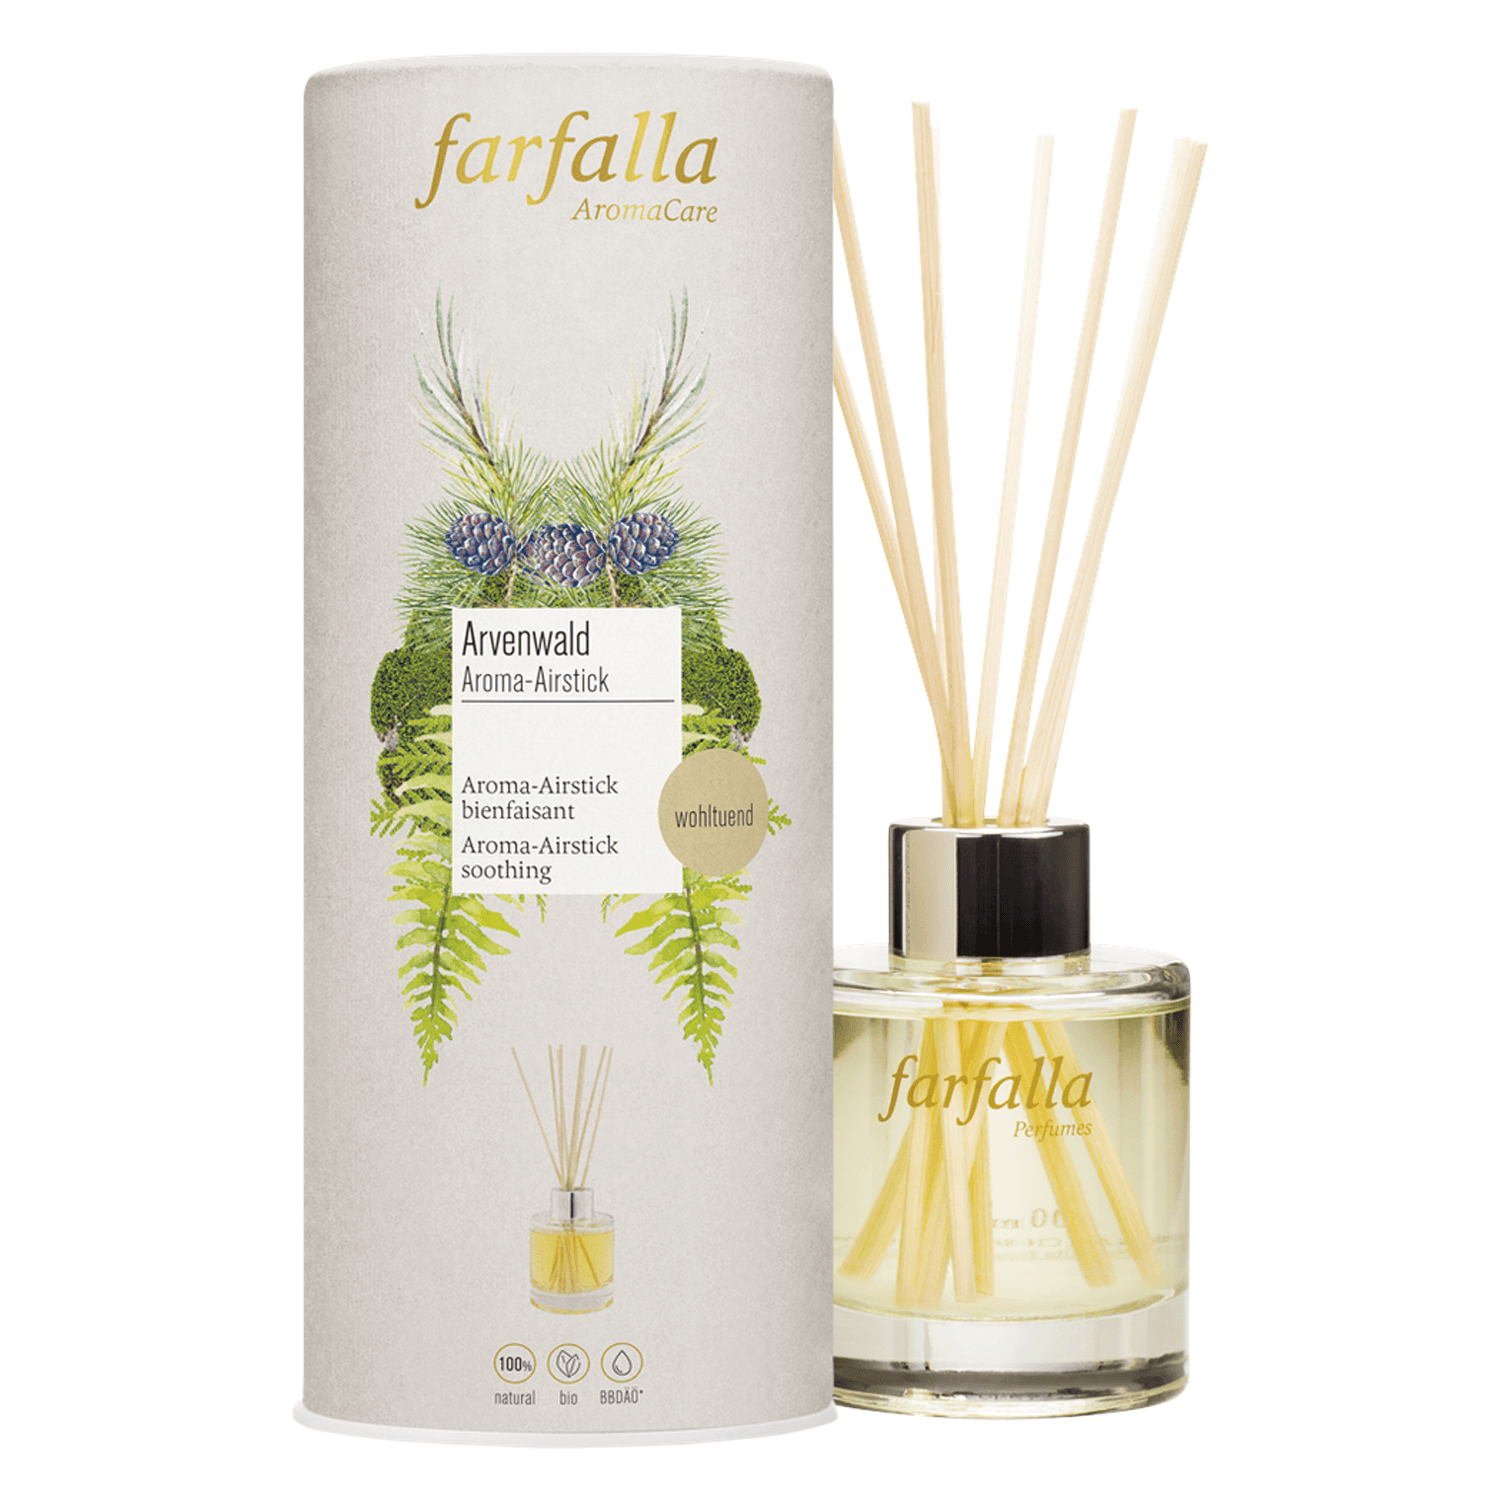 Farfalla Sets - Arvenwald Aroma-Airstick